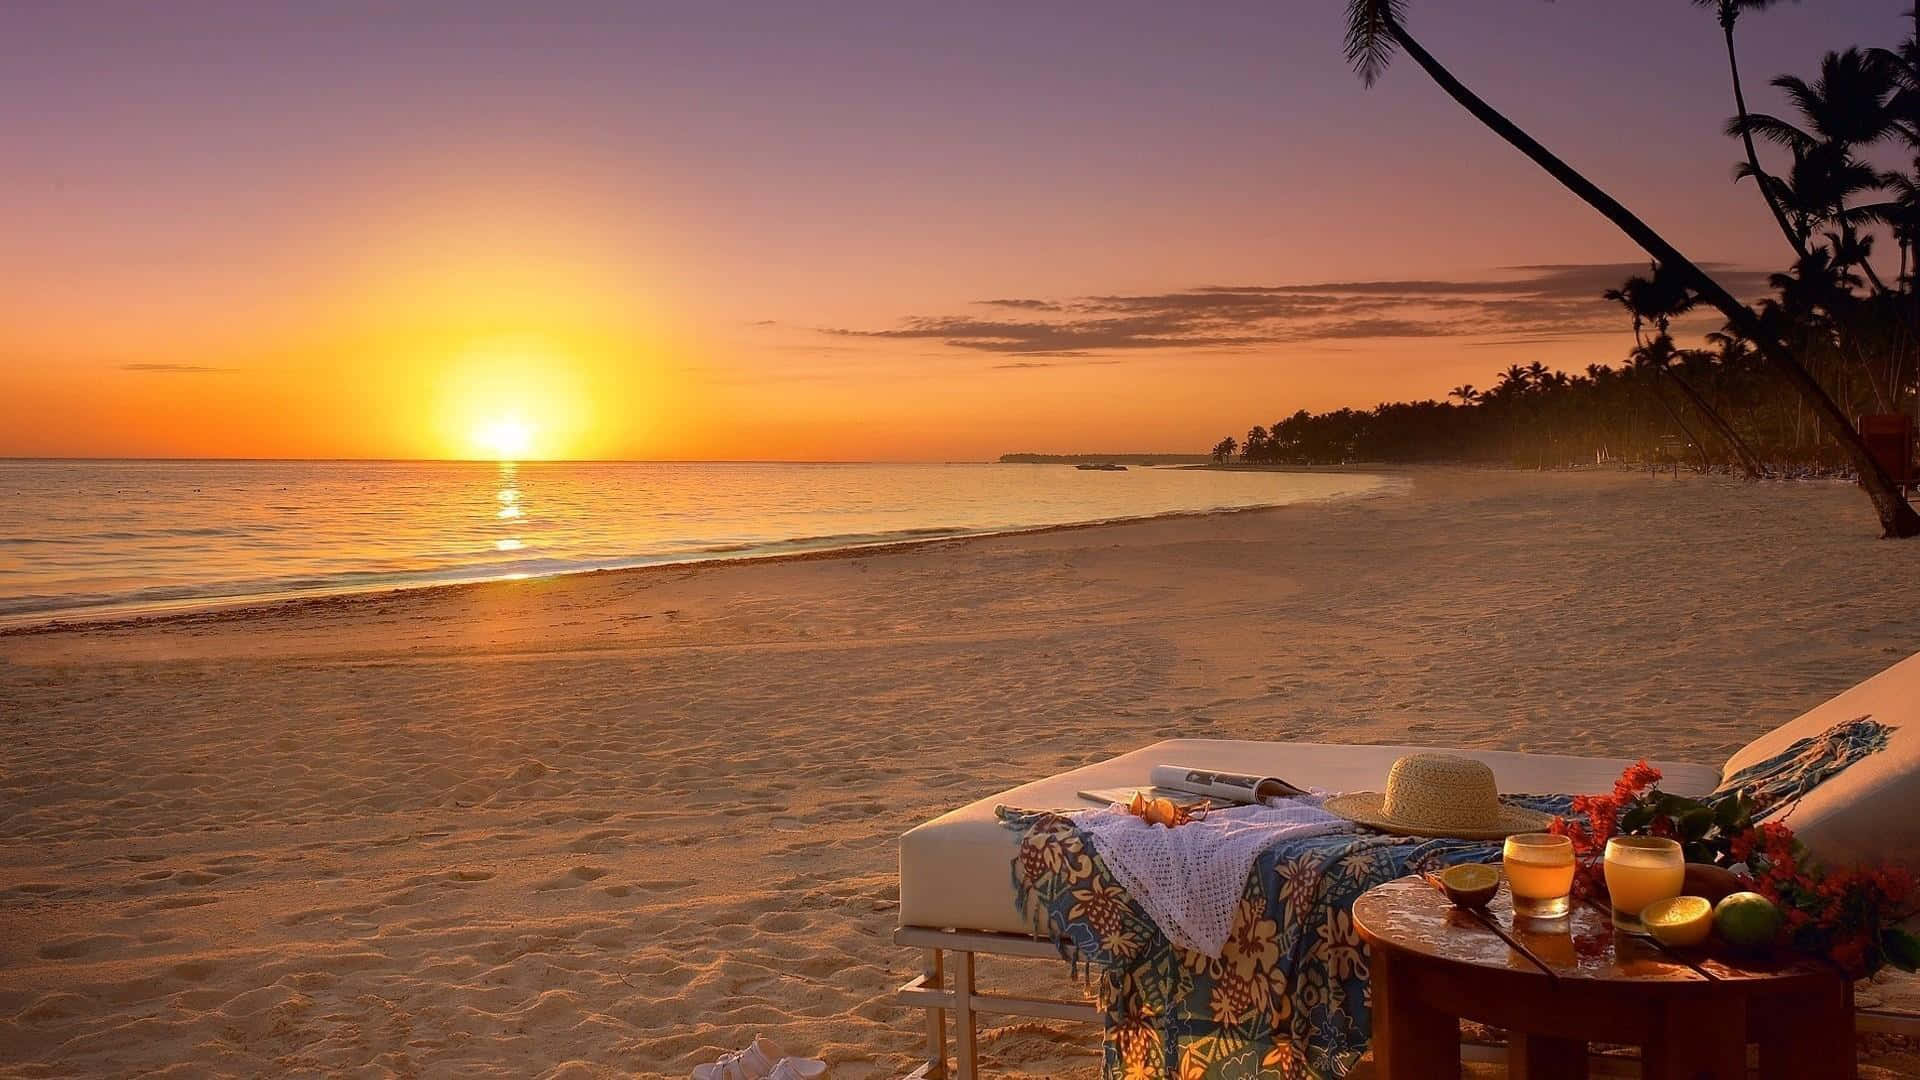 Serene Seaside View at Sunset Wallpaper